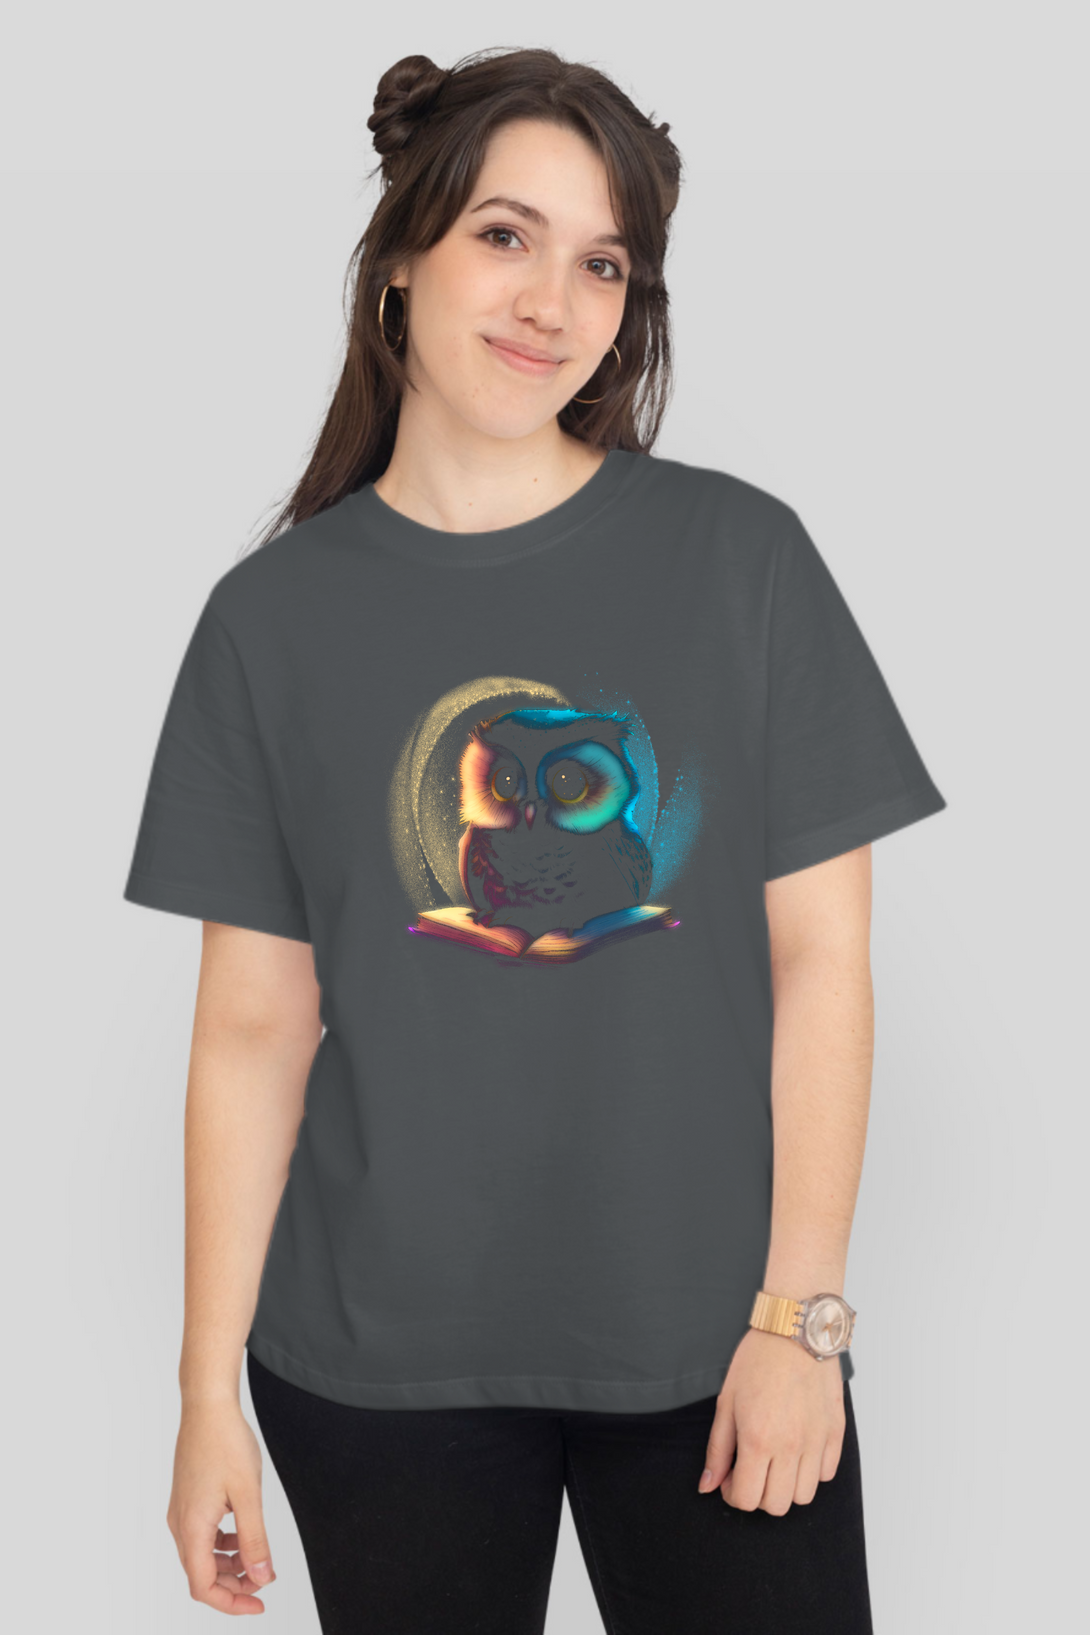 Cute Owl Printed T-Shirt For Women - WowWaves - 7